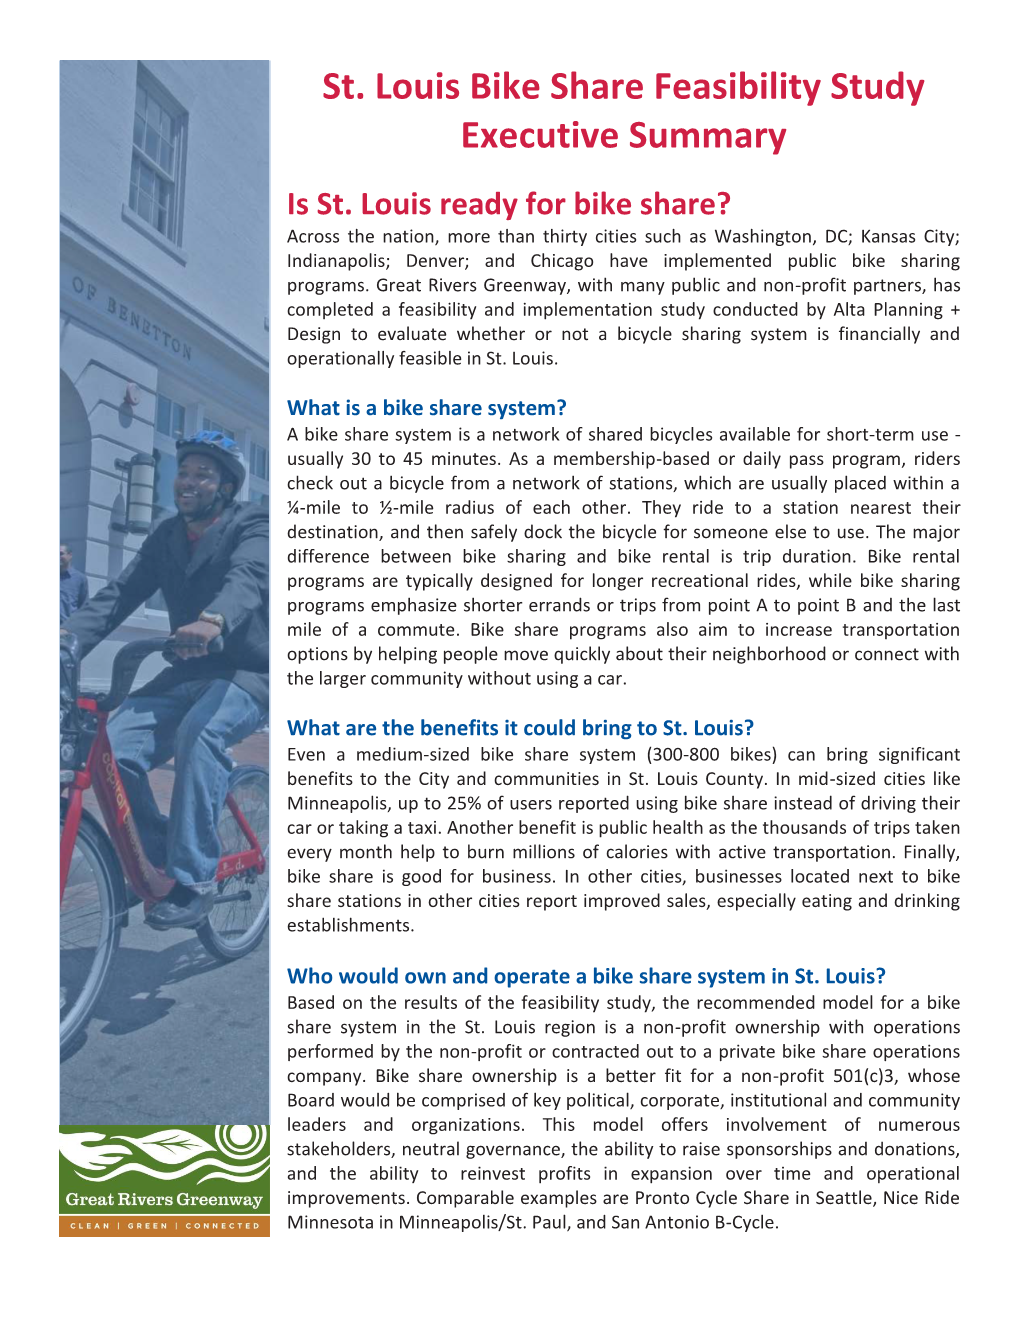 St. Louis Bike Share Feasibility Study Executive Summary